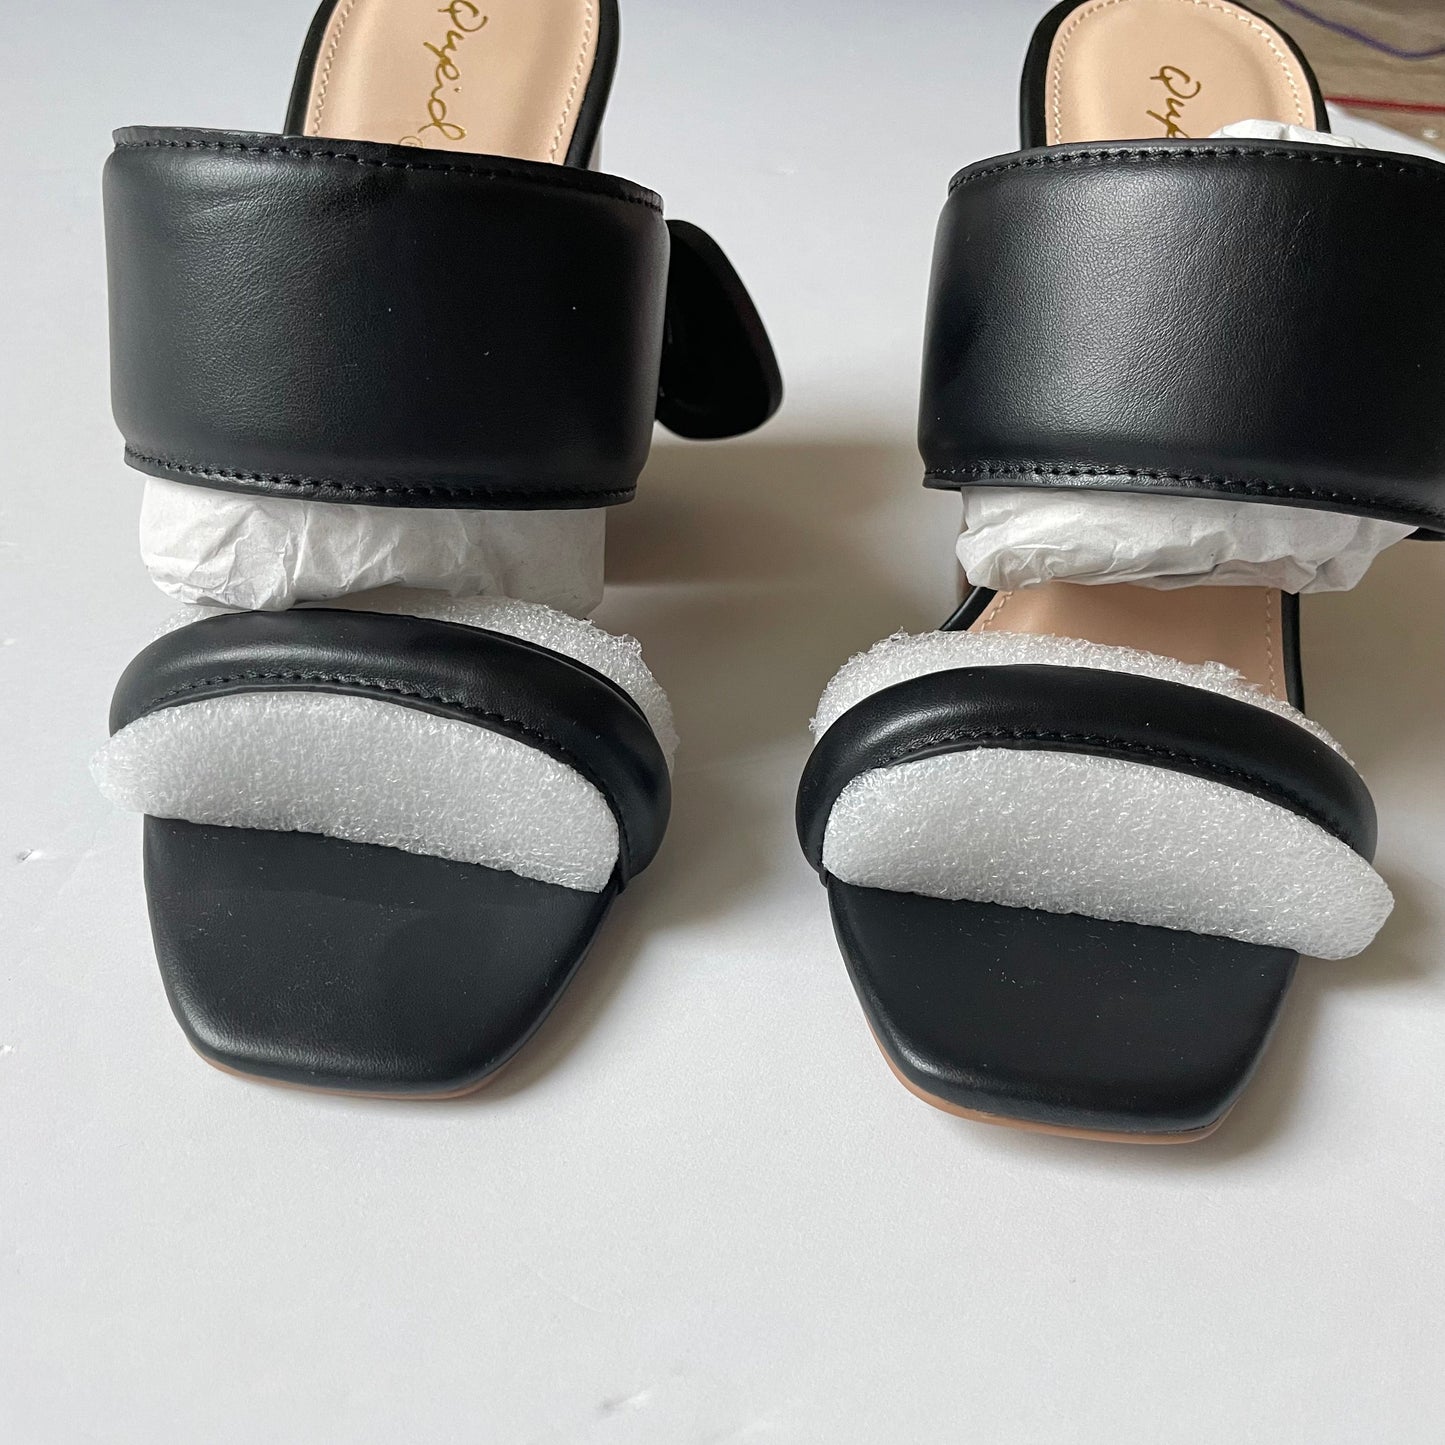 Black Shoes Heels Block Qupid, Size 10